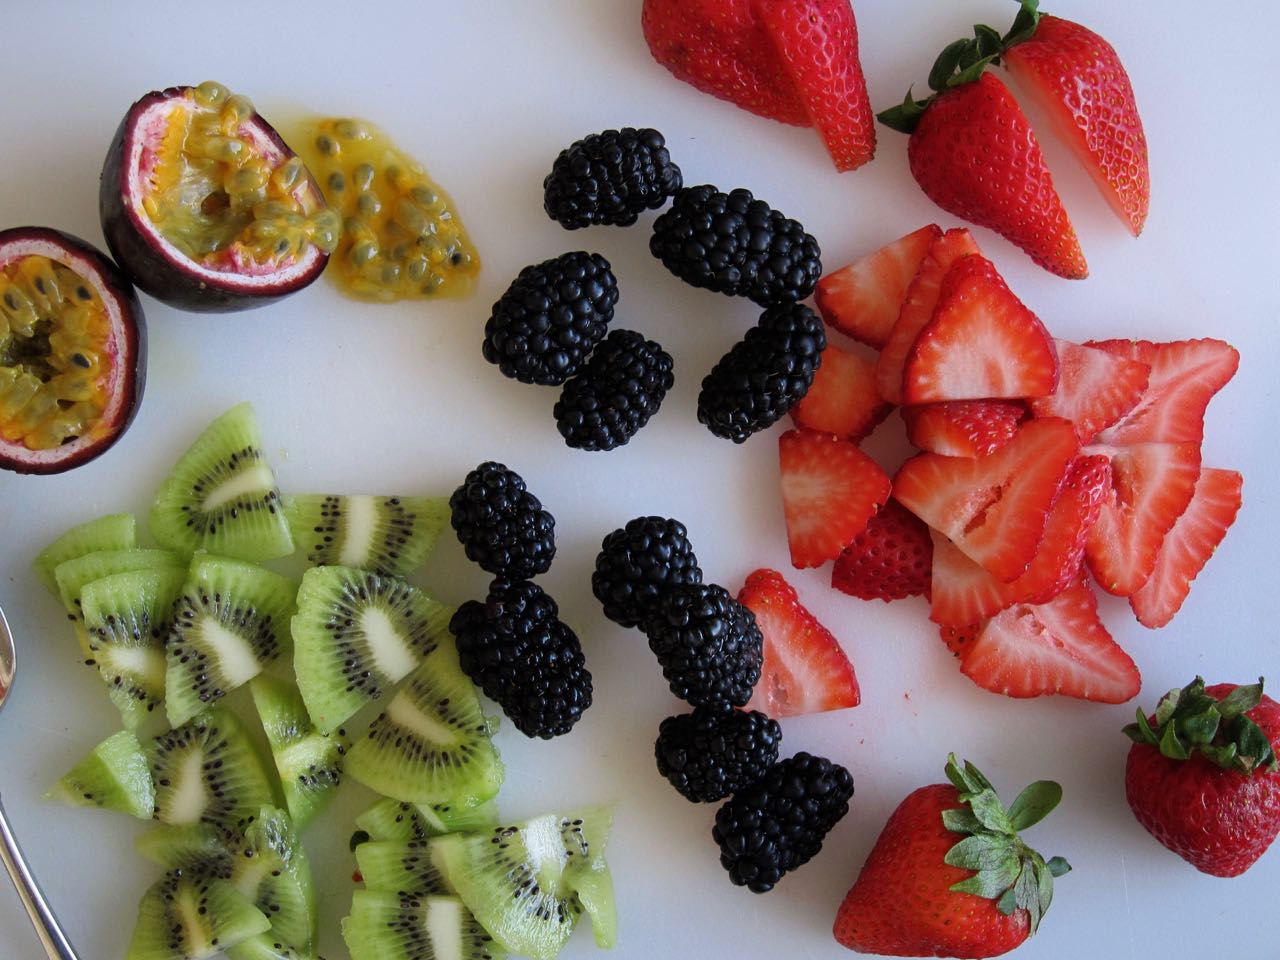 Assorted Berries and Fruit.jpg